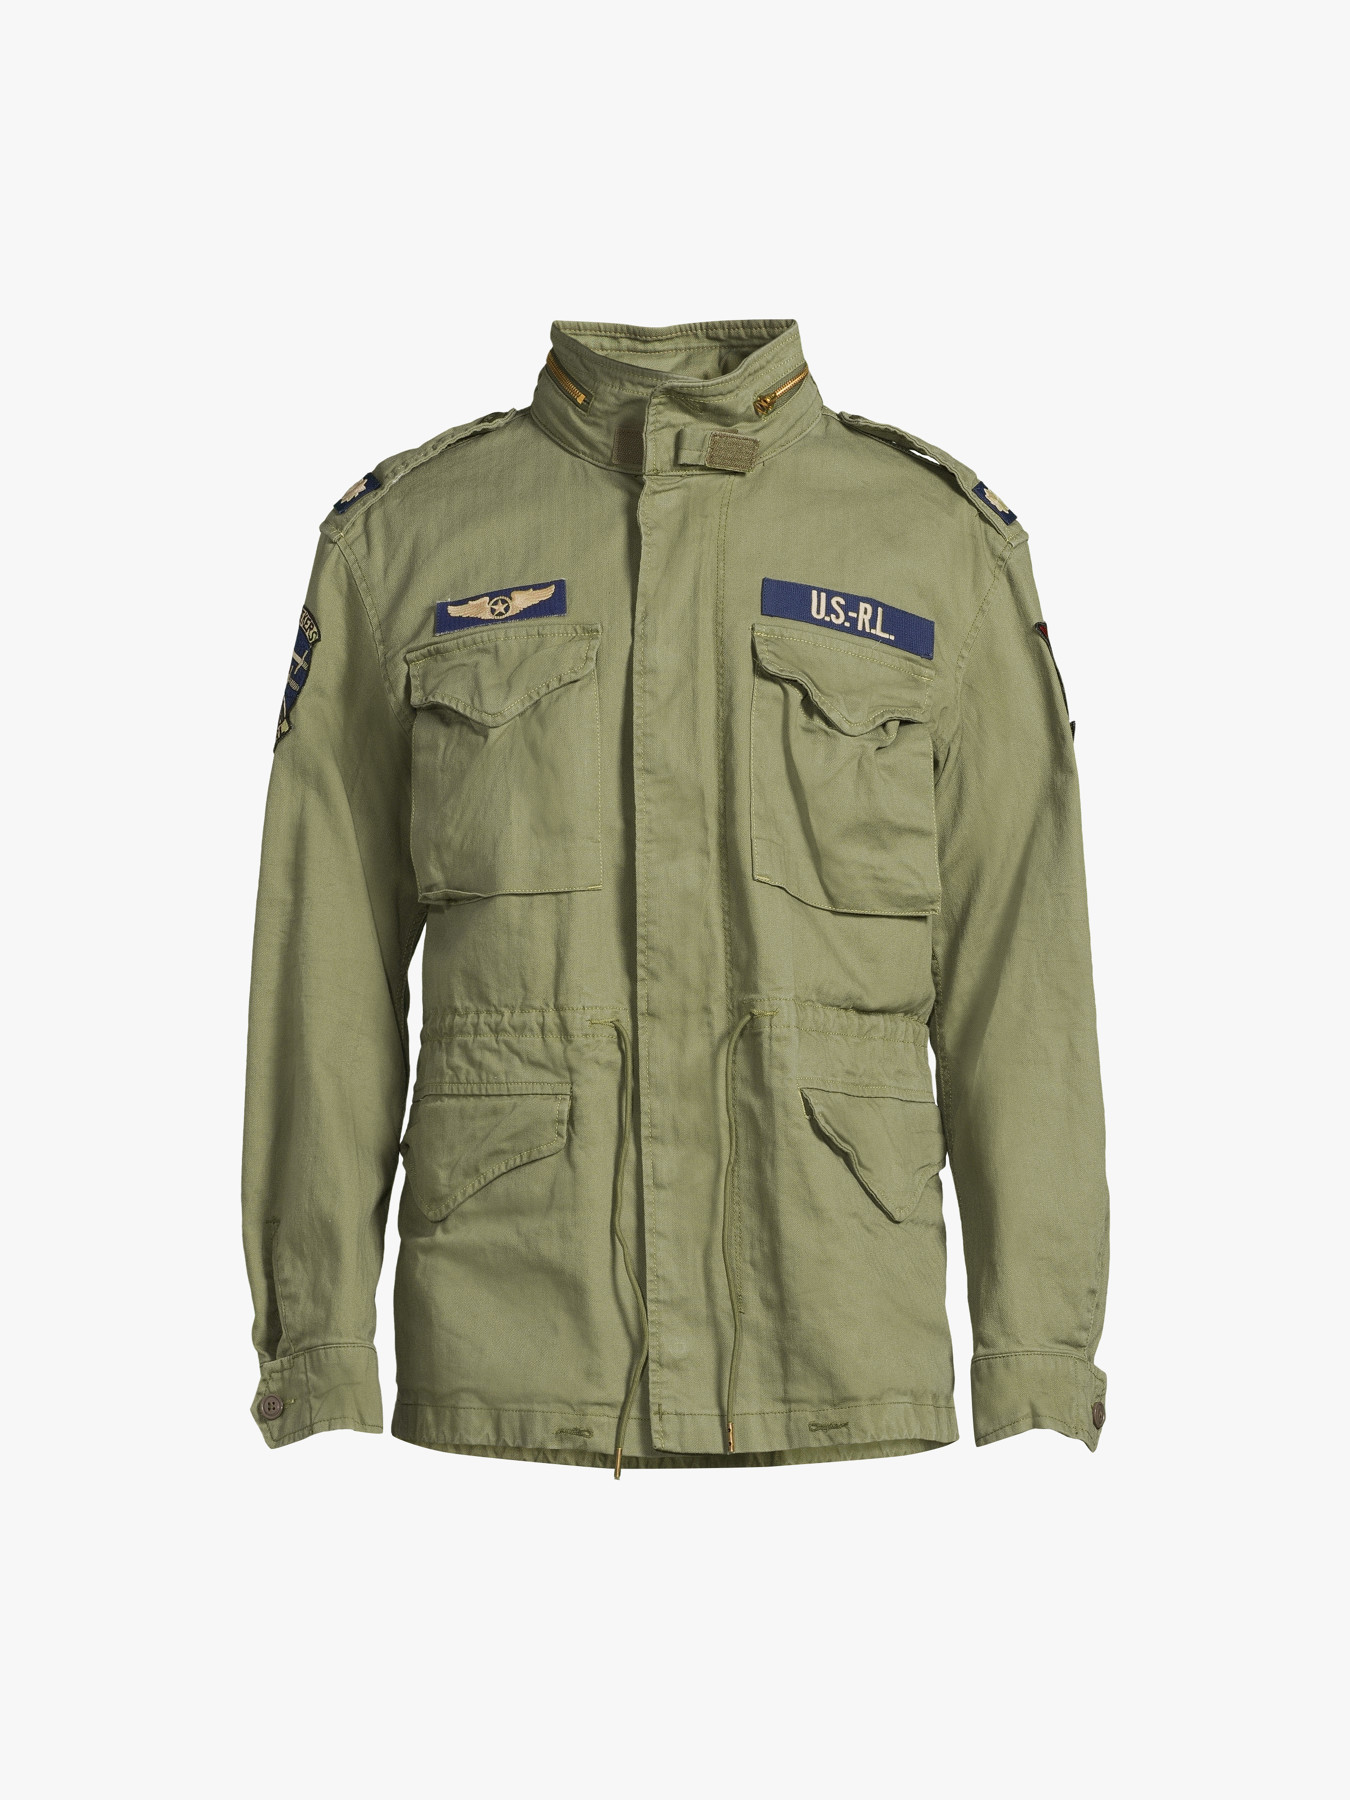 Polo Ralph Lauren M65 Combat Jacket | Field Jackets | Fenwick